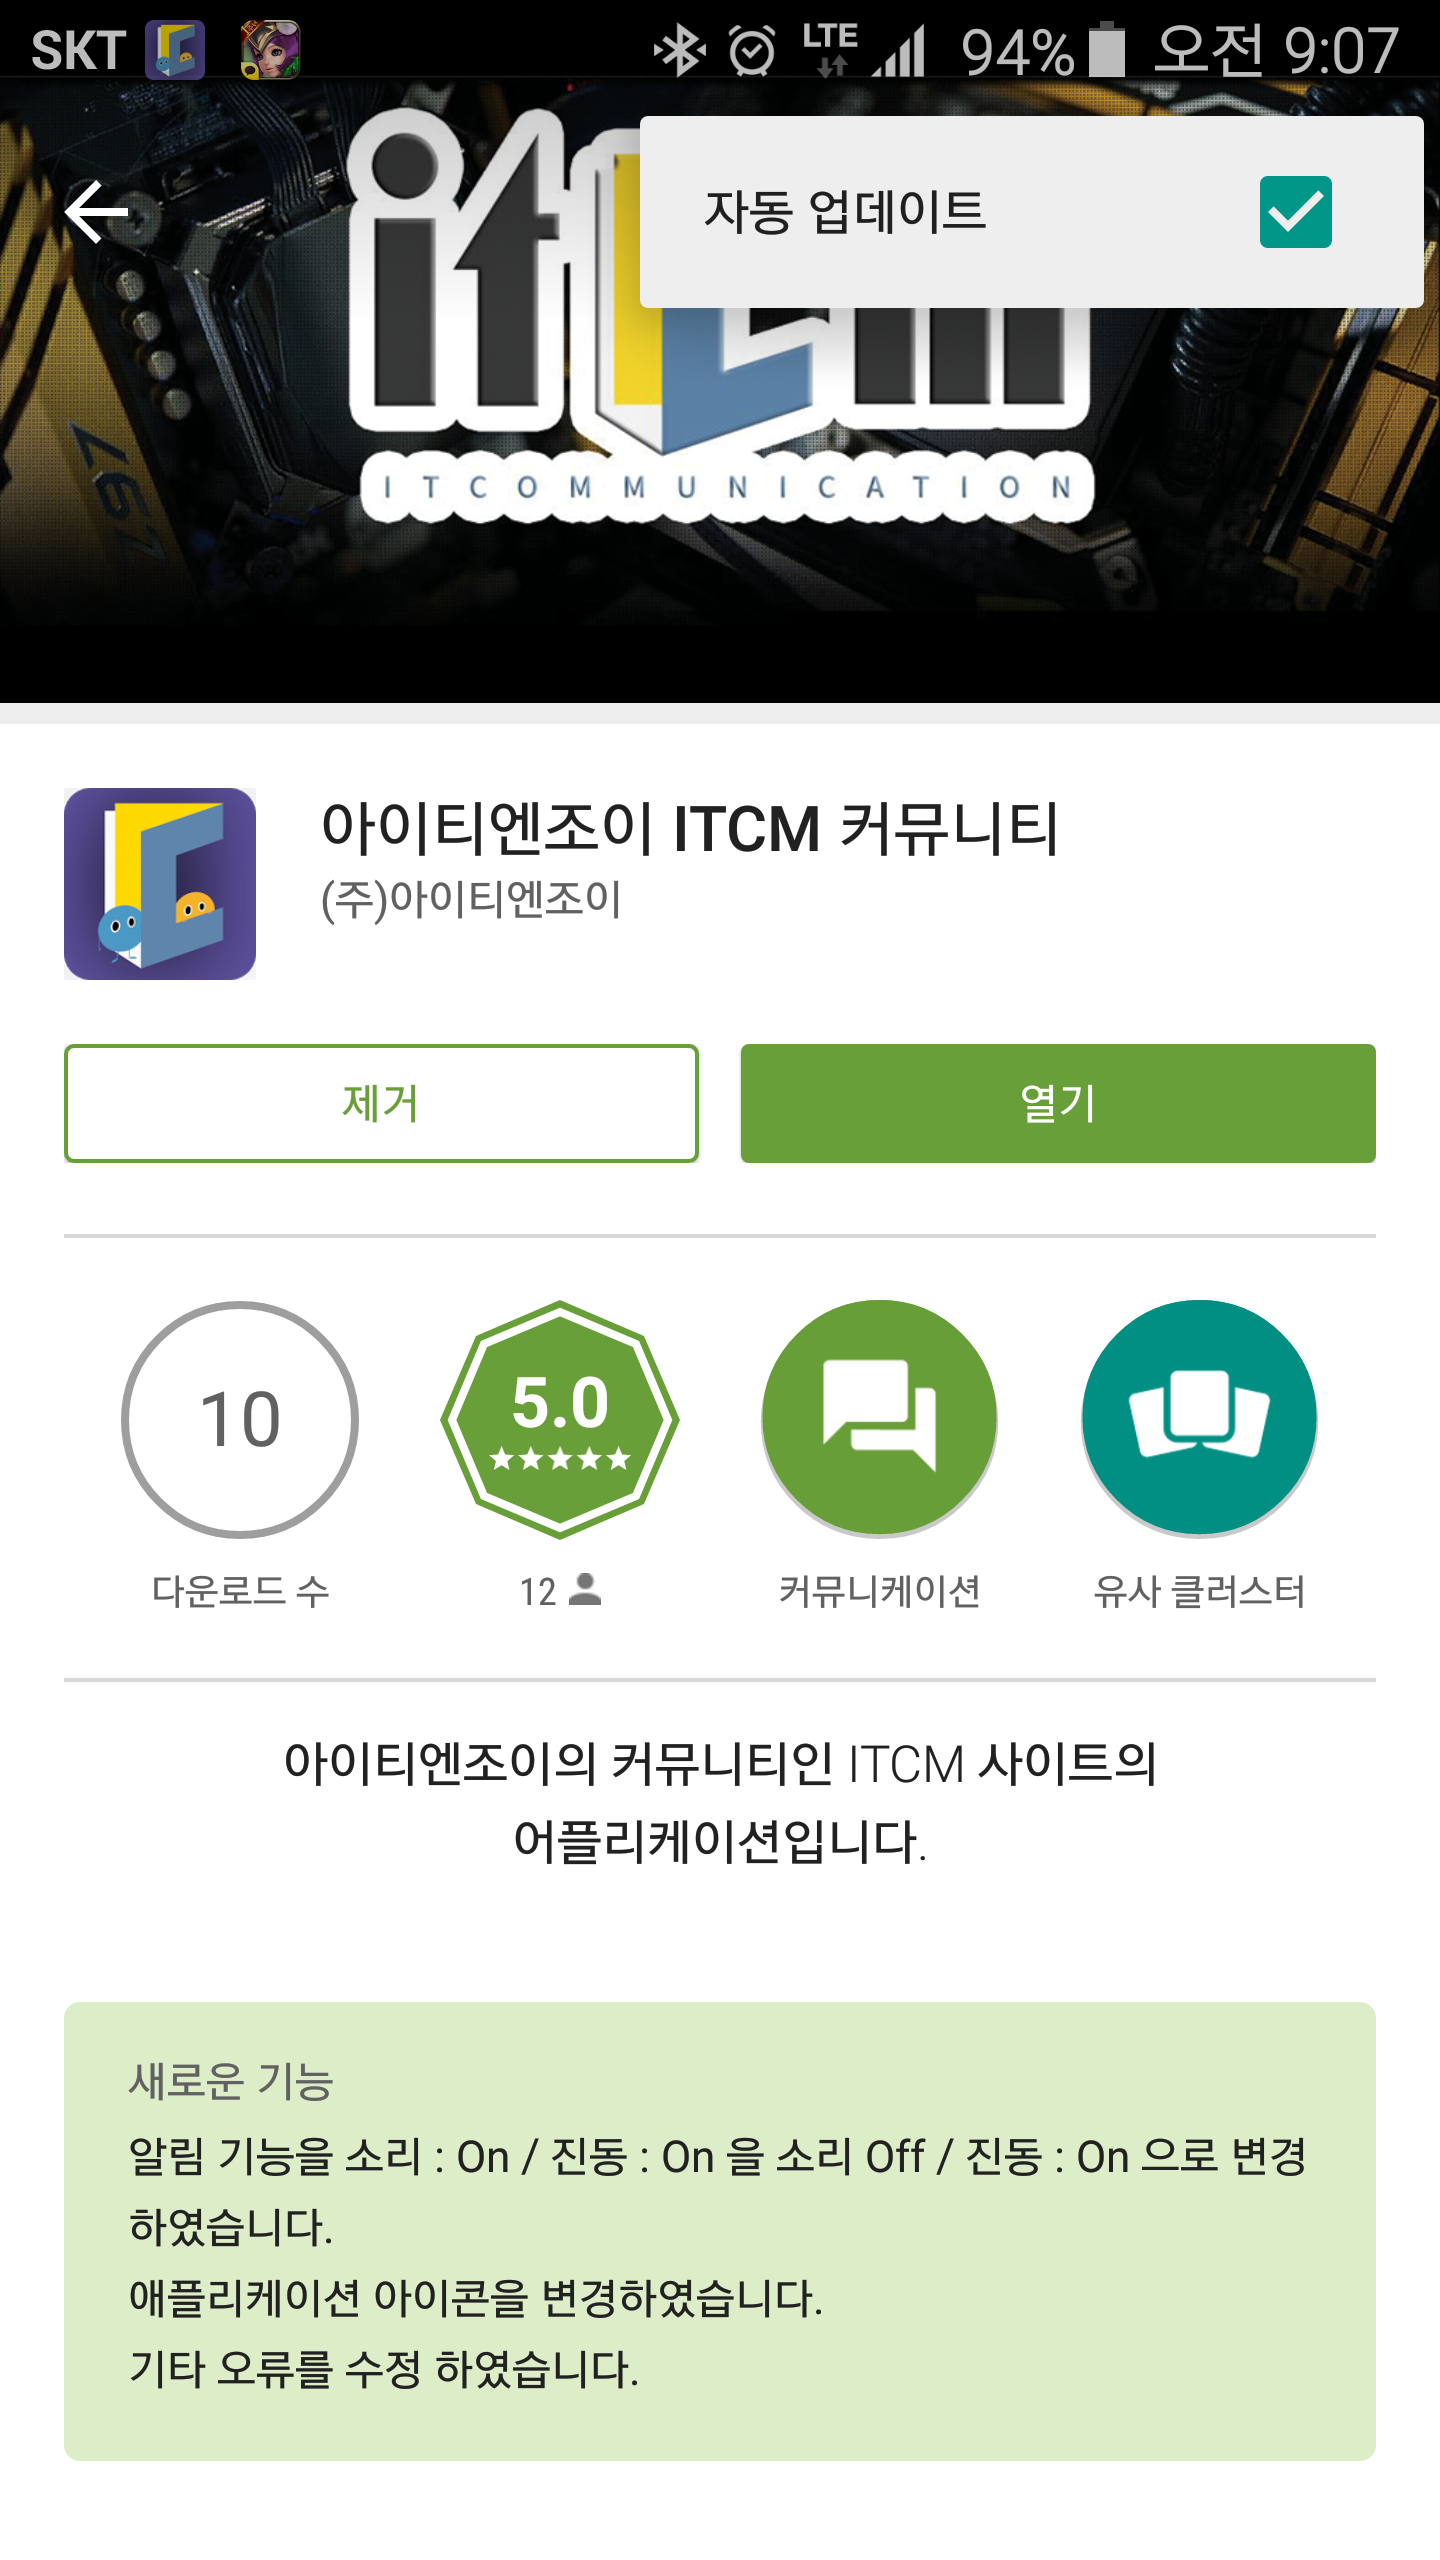 Screenshot_2015-04-30-09-07-06.png : ex) [이벤트 참여] ITCM 앱 출시를 축하합니다.